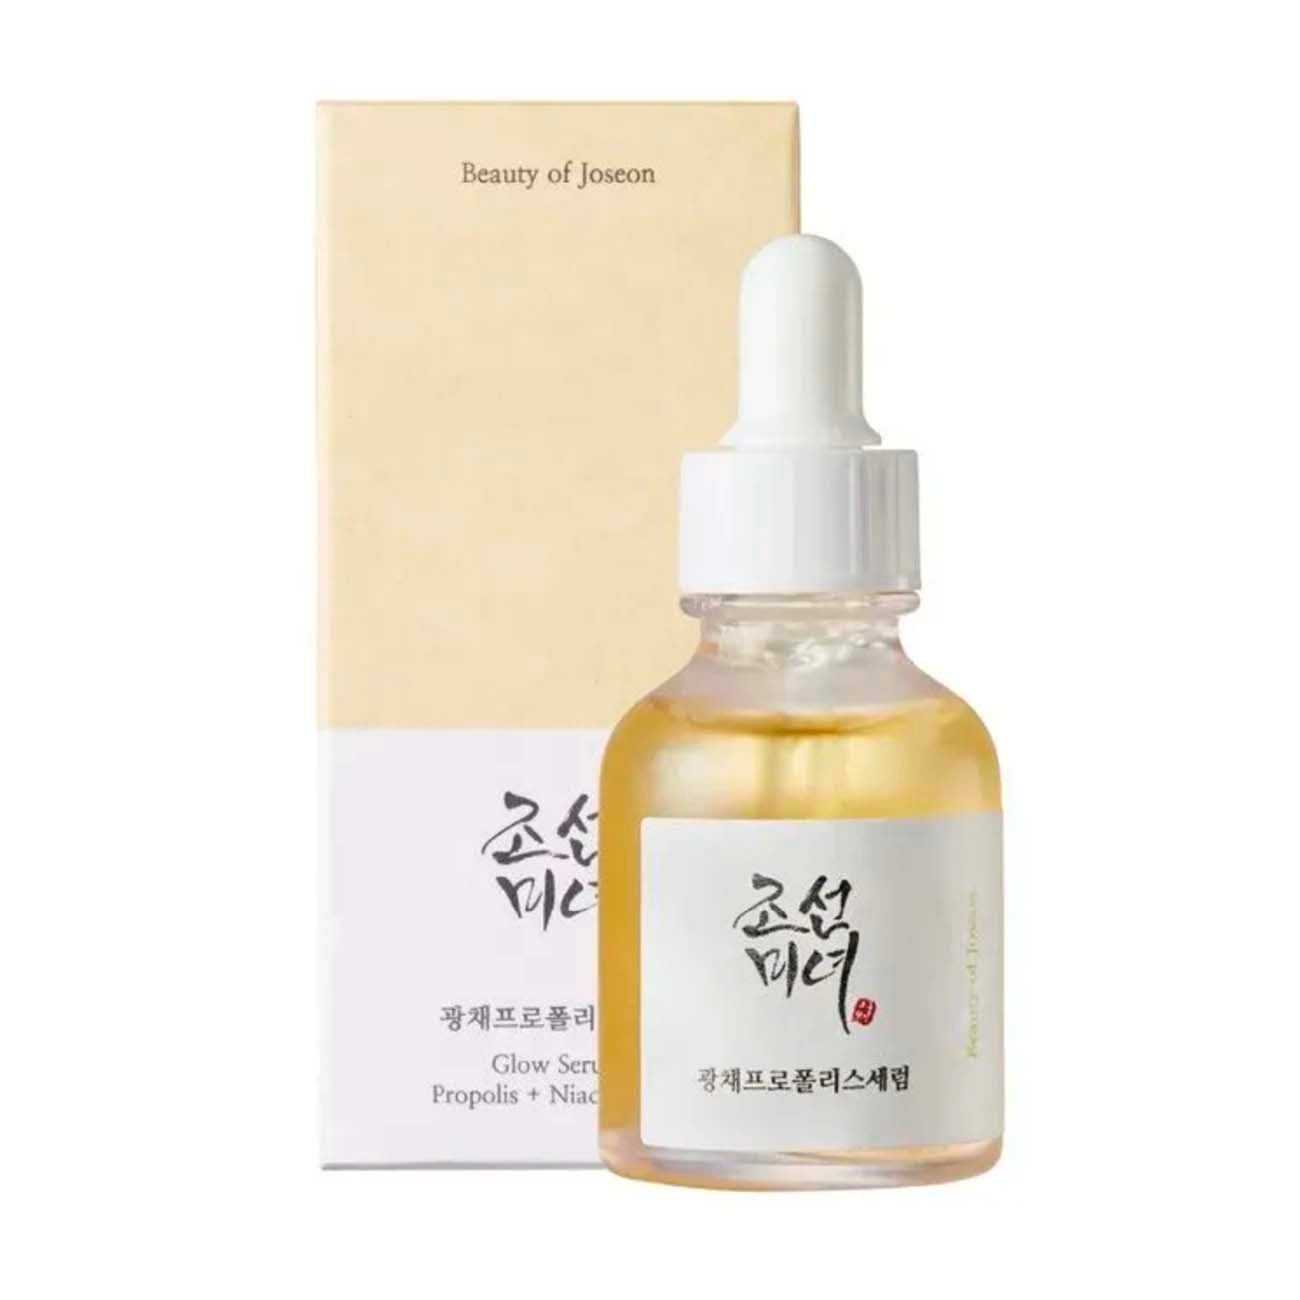 Beauty of Joseon - Glow Serum : Propolis + Niacinamide